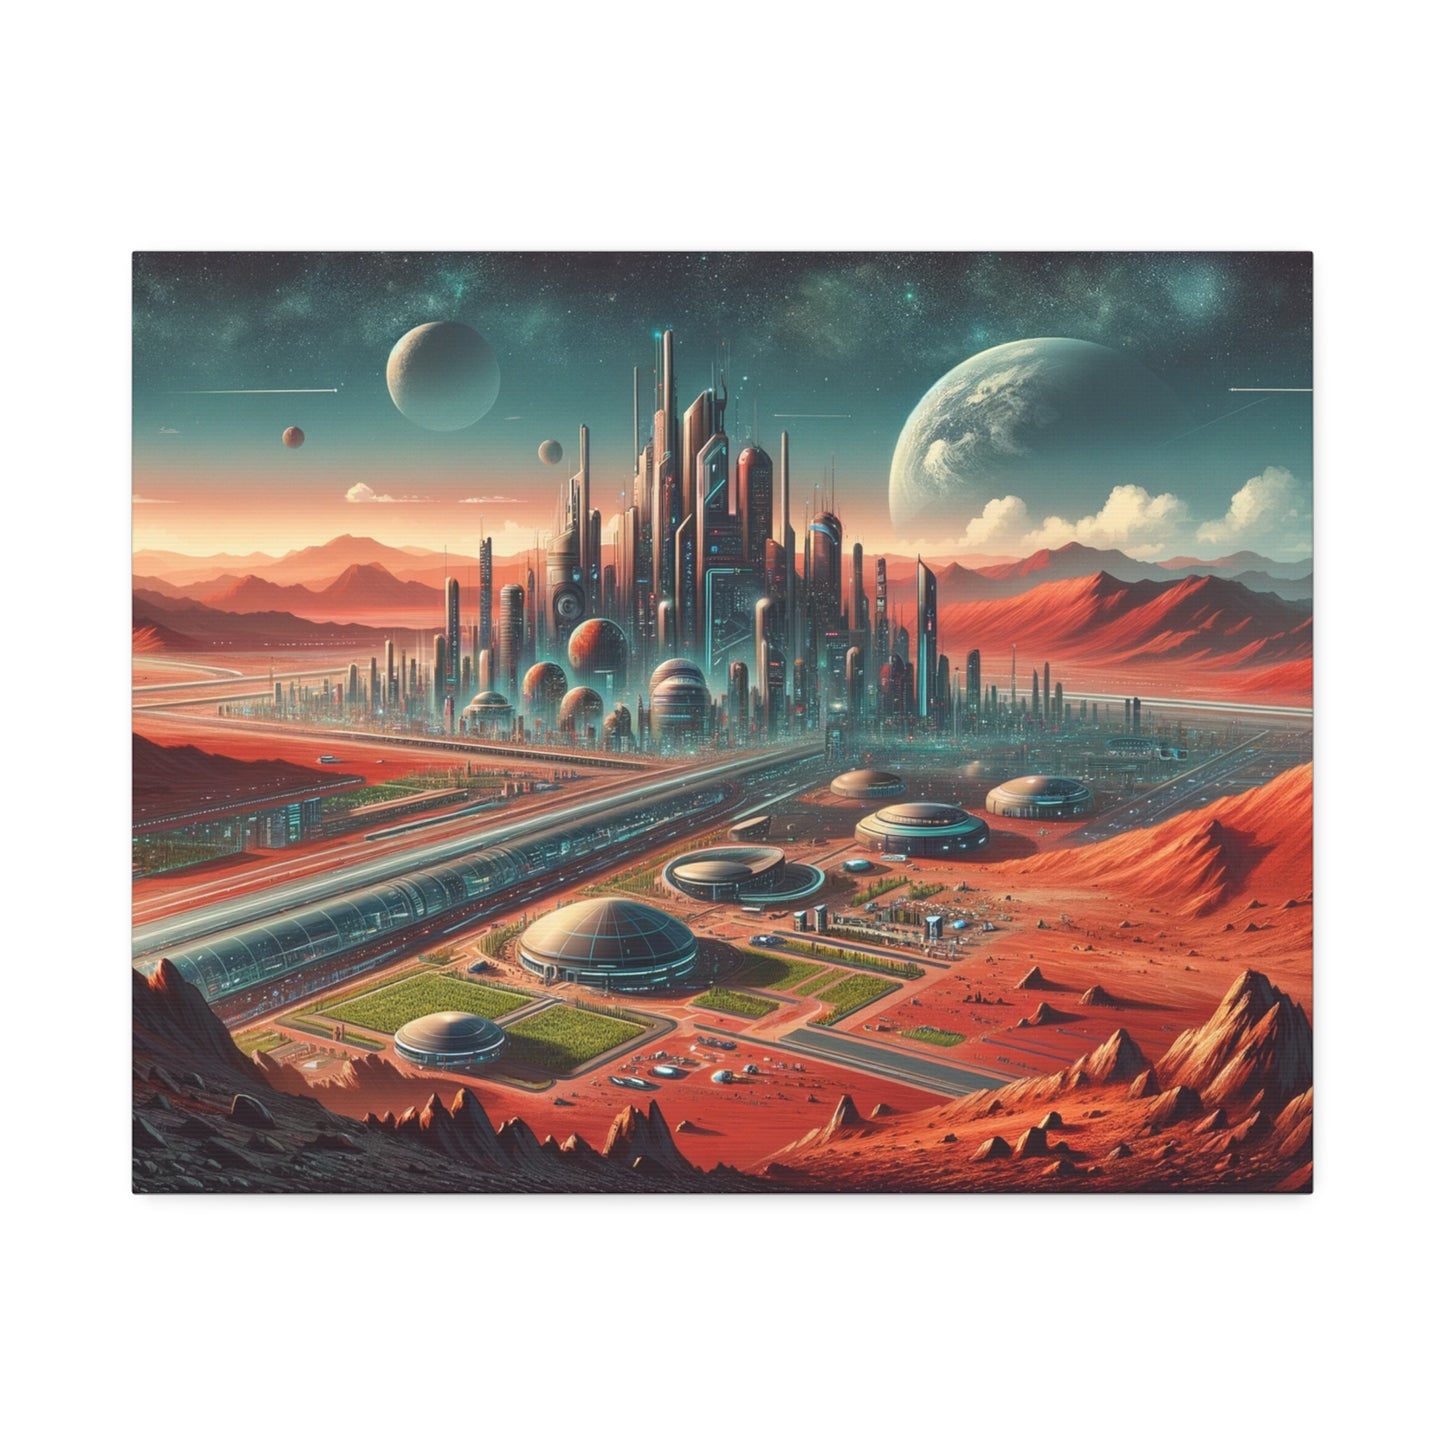 Martian Metropolis: Futuristic City on Mars Canvas Art